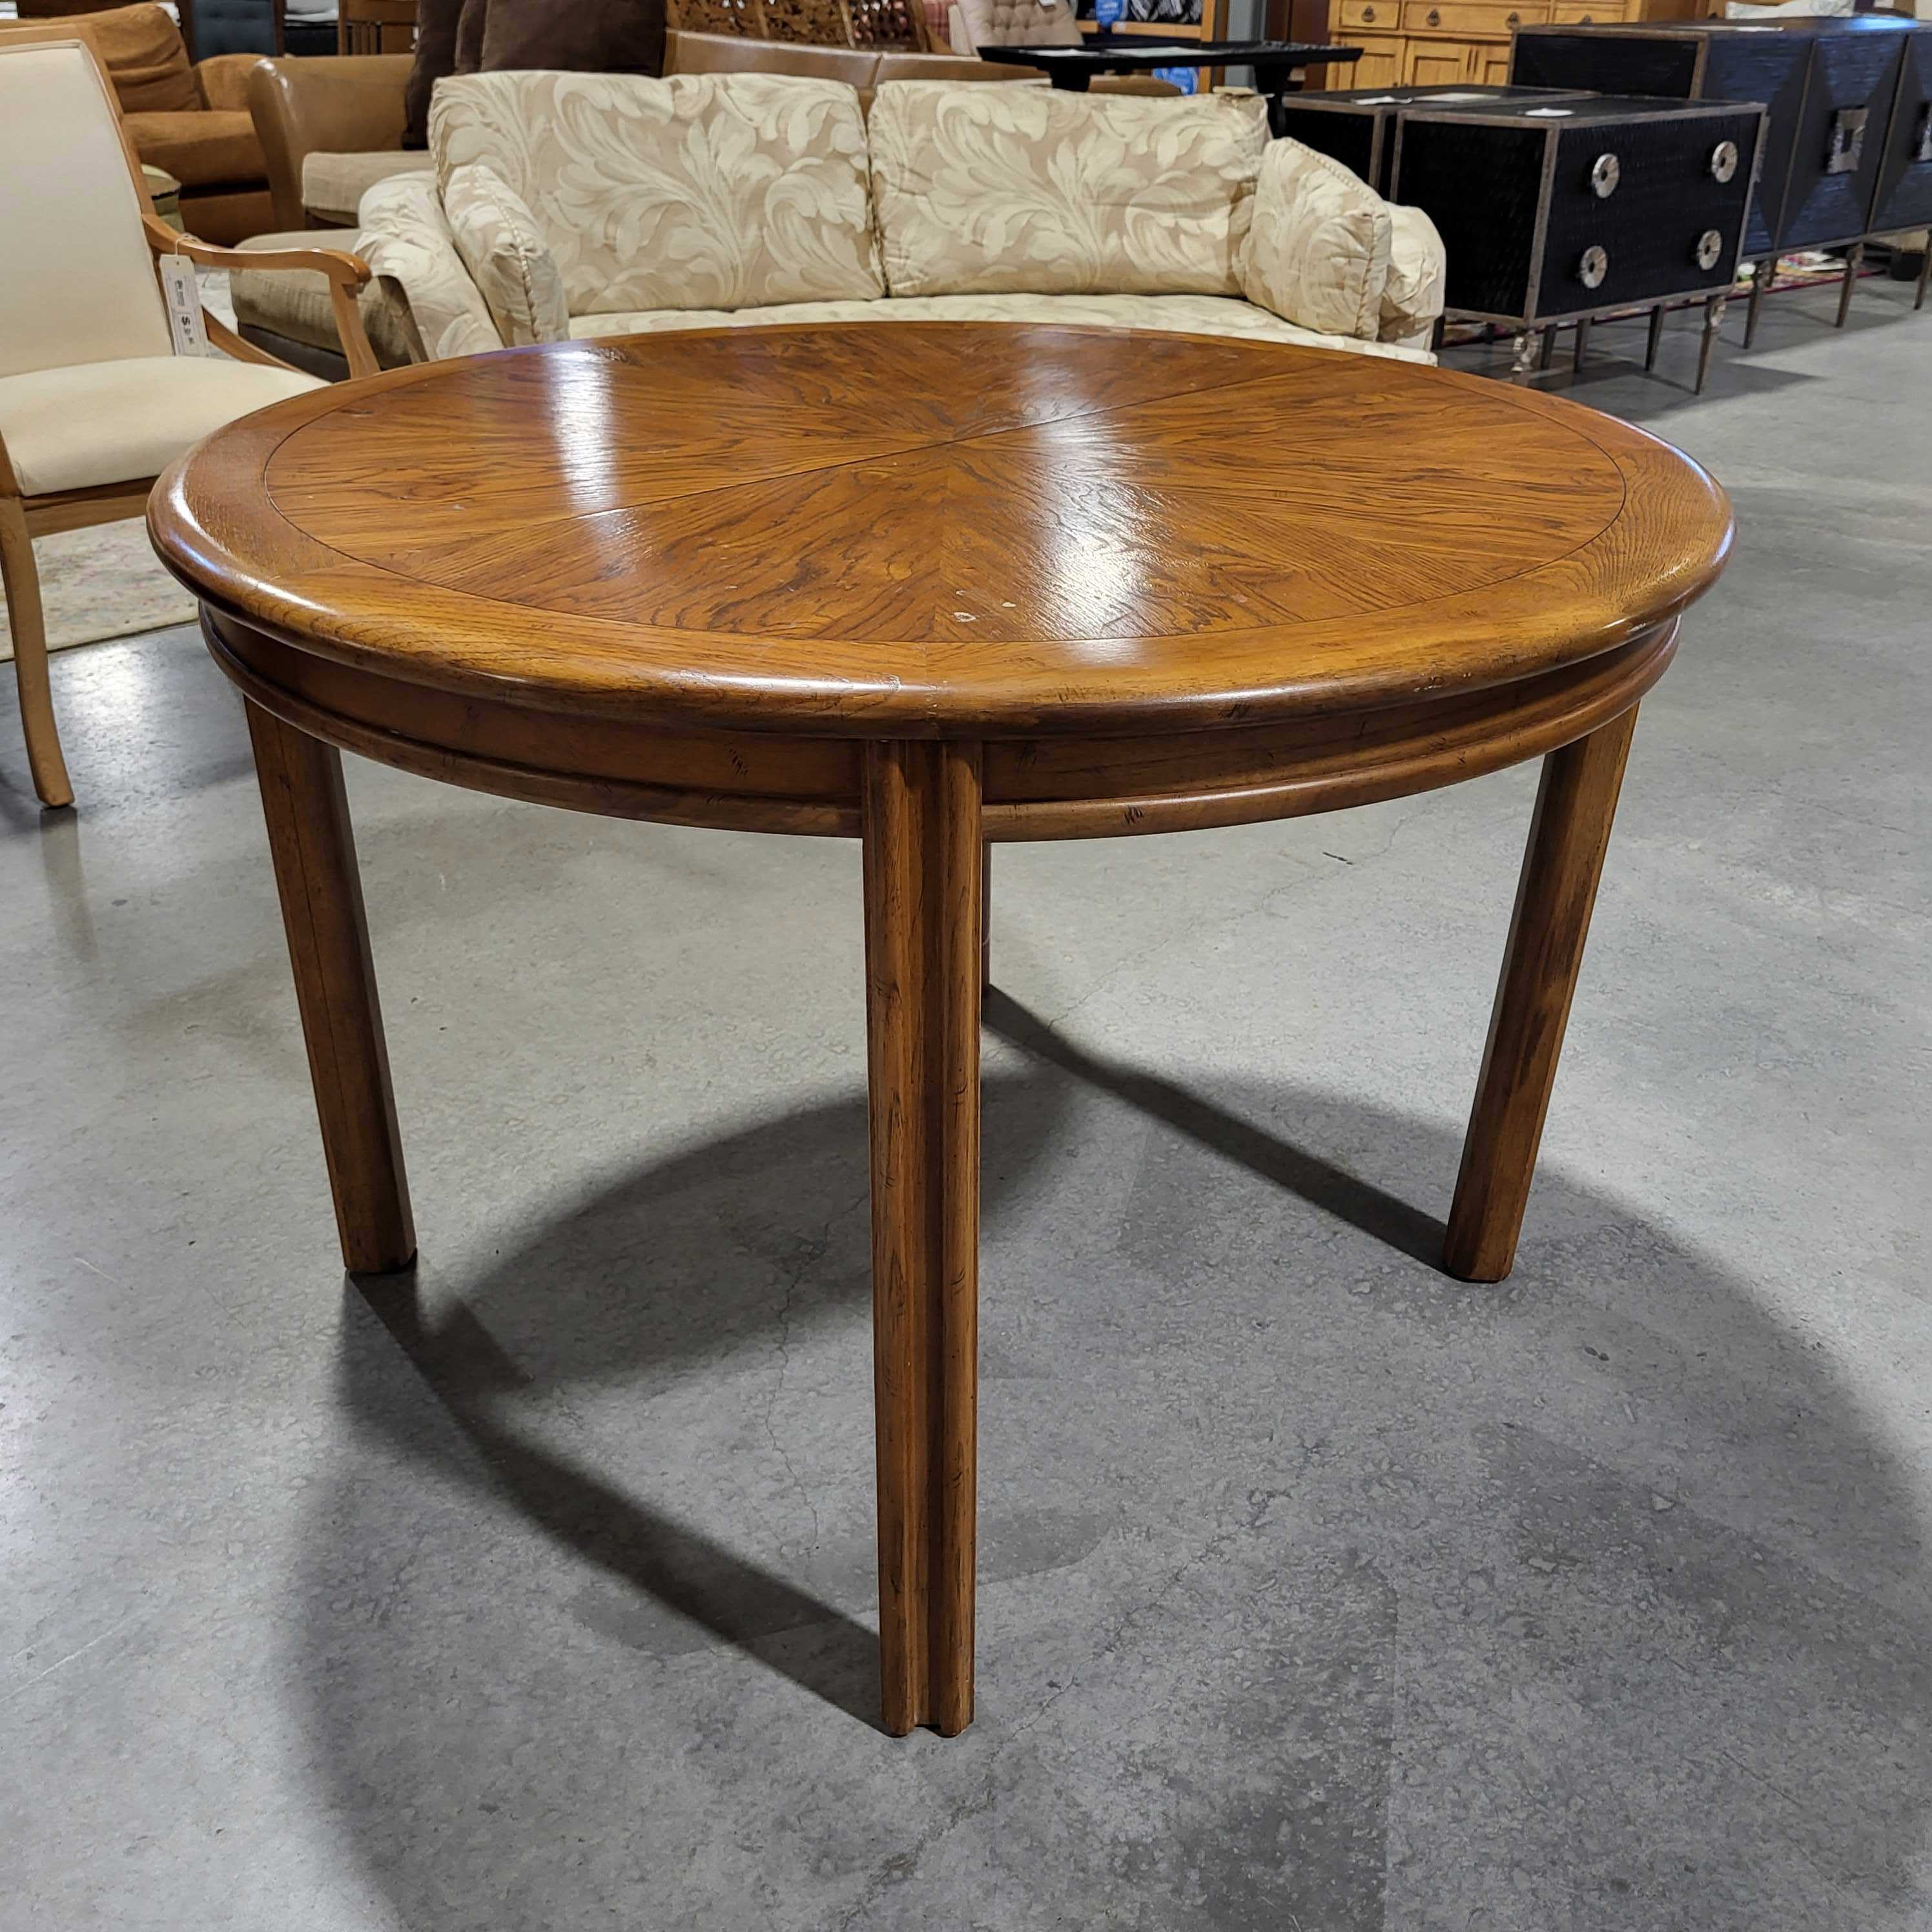 Wooden Round 4 Leg Table